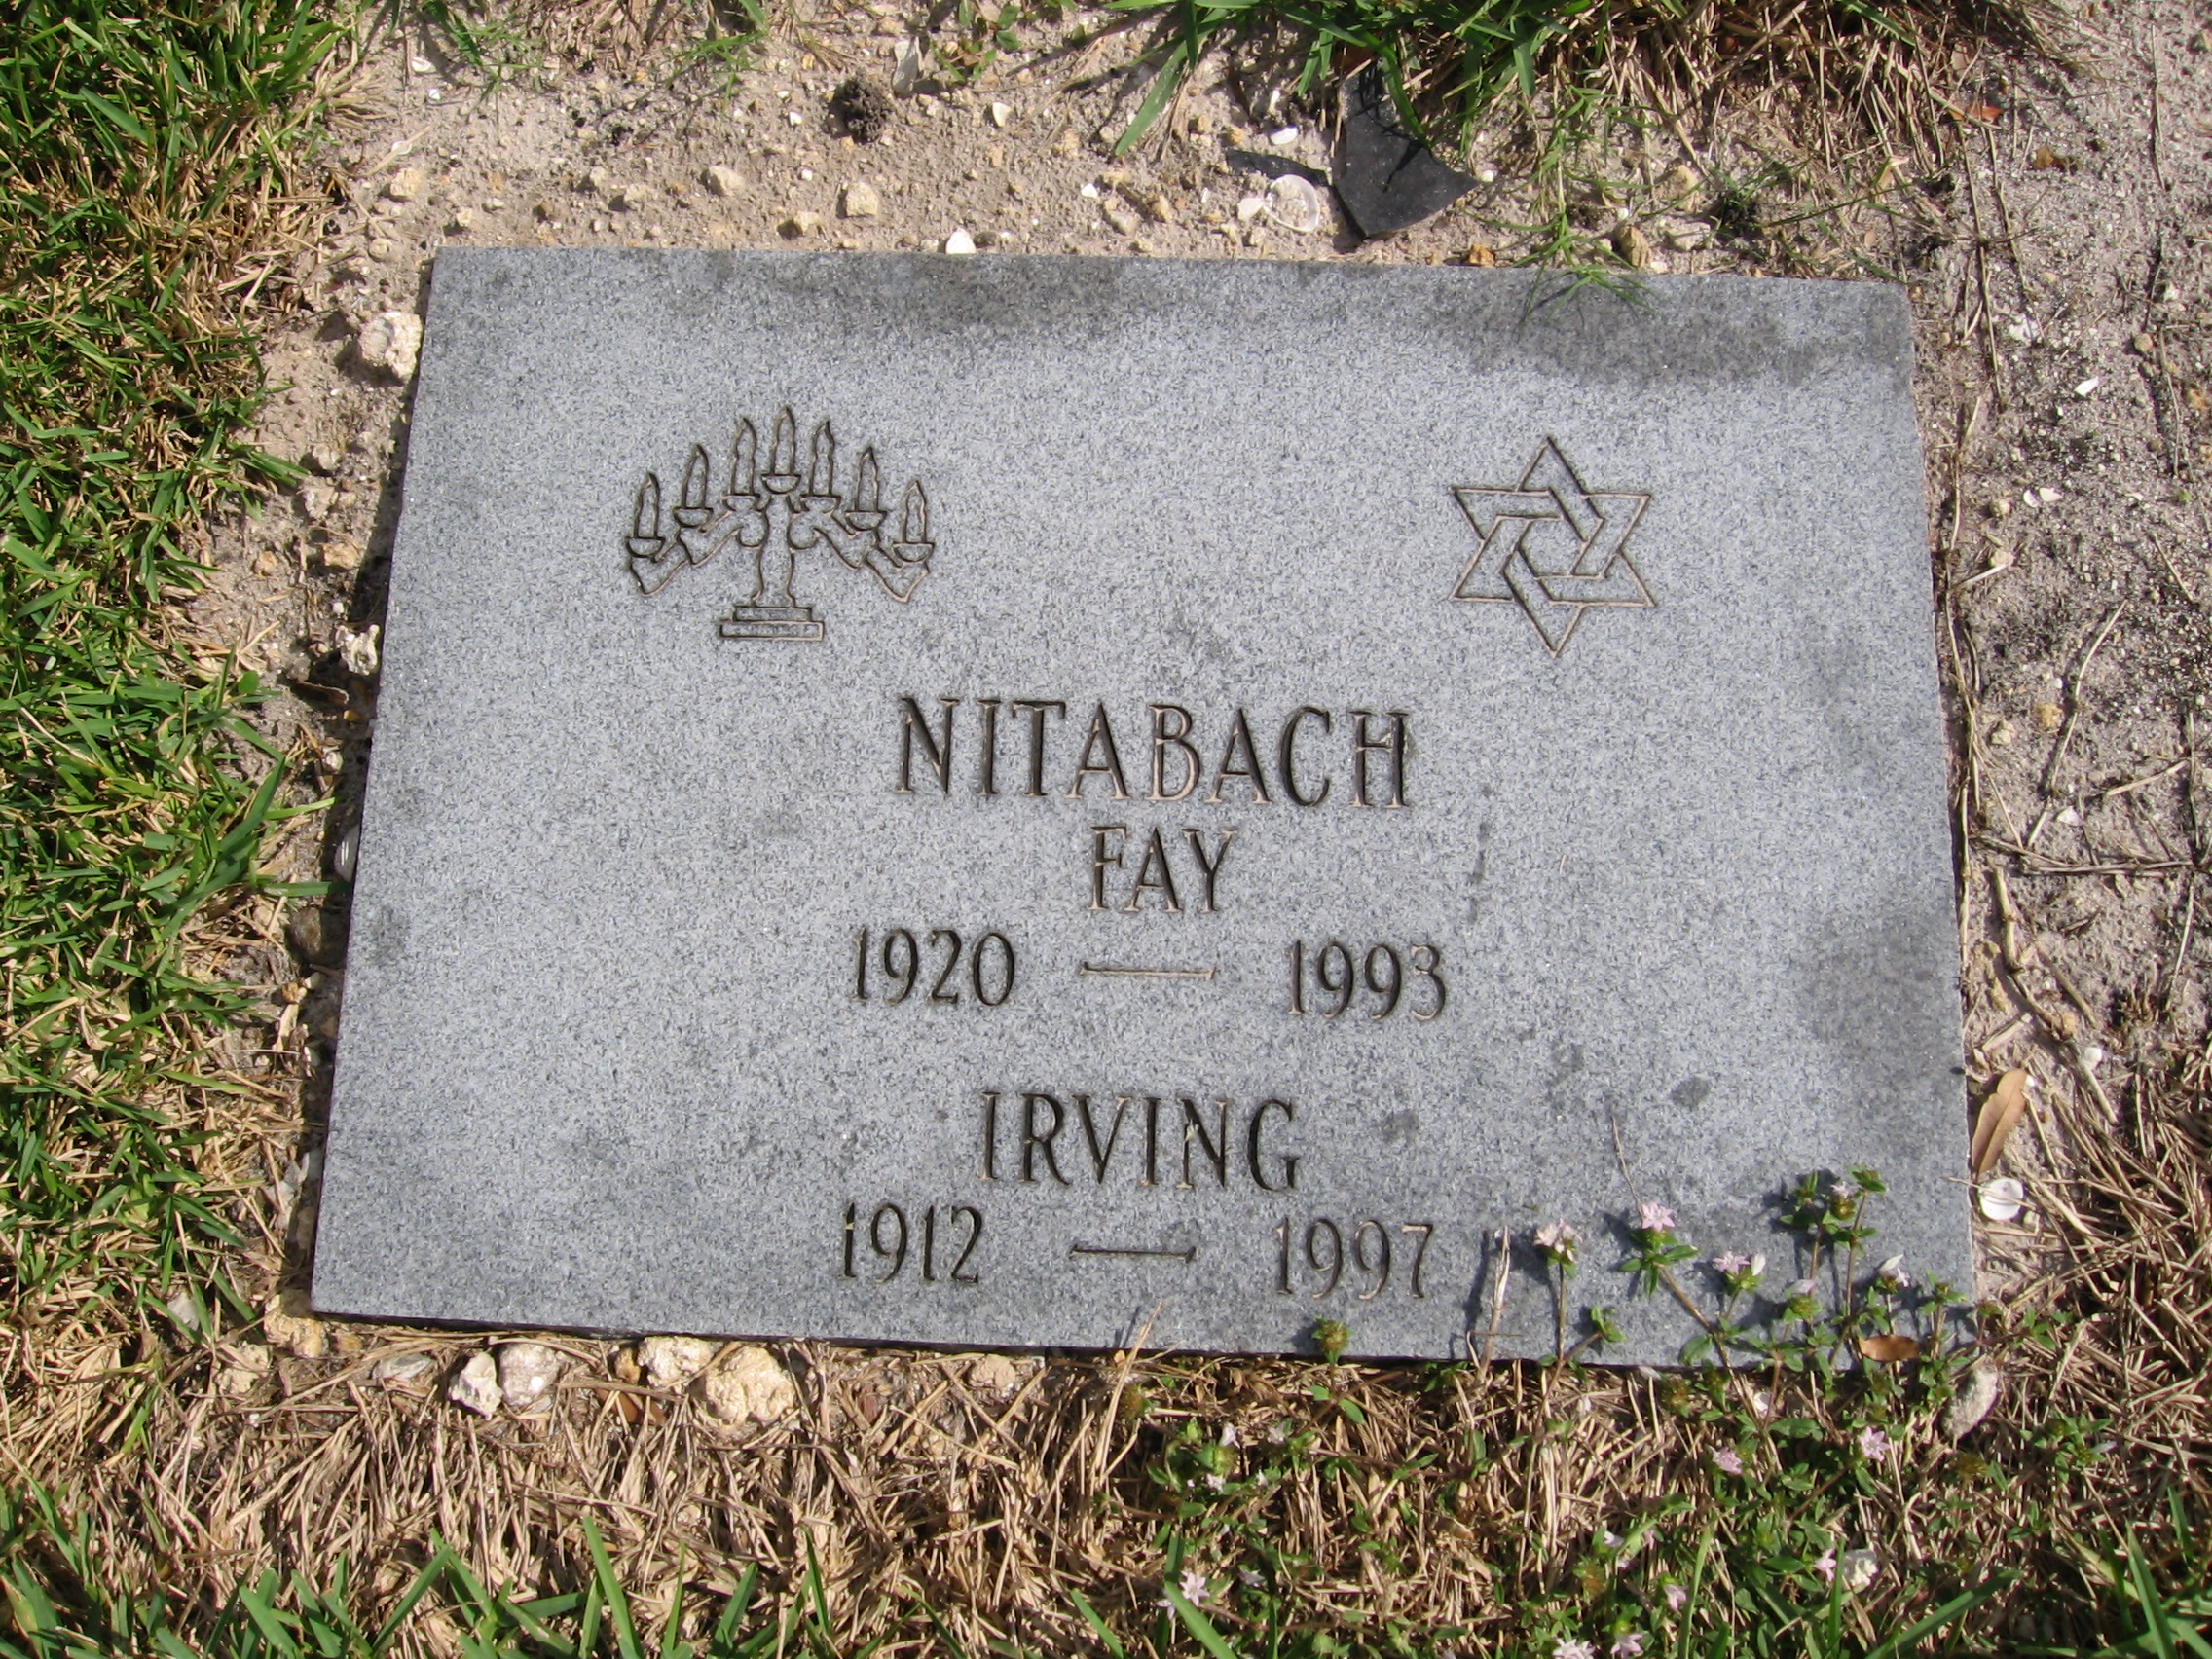 Fay Nitabach